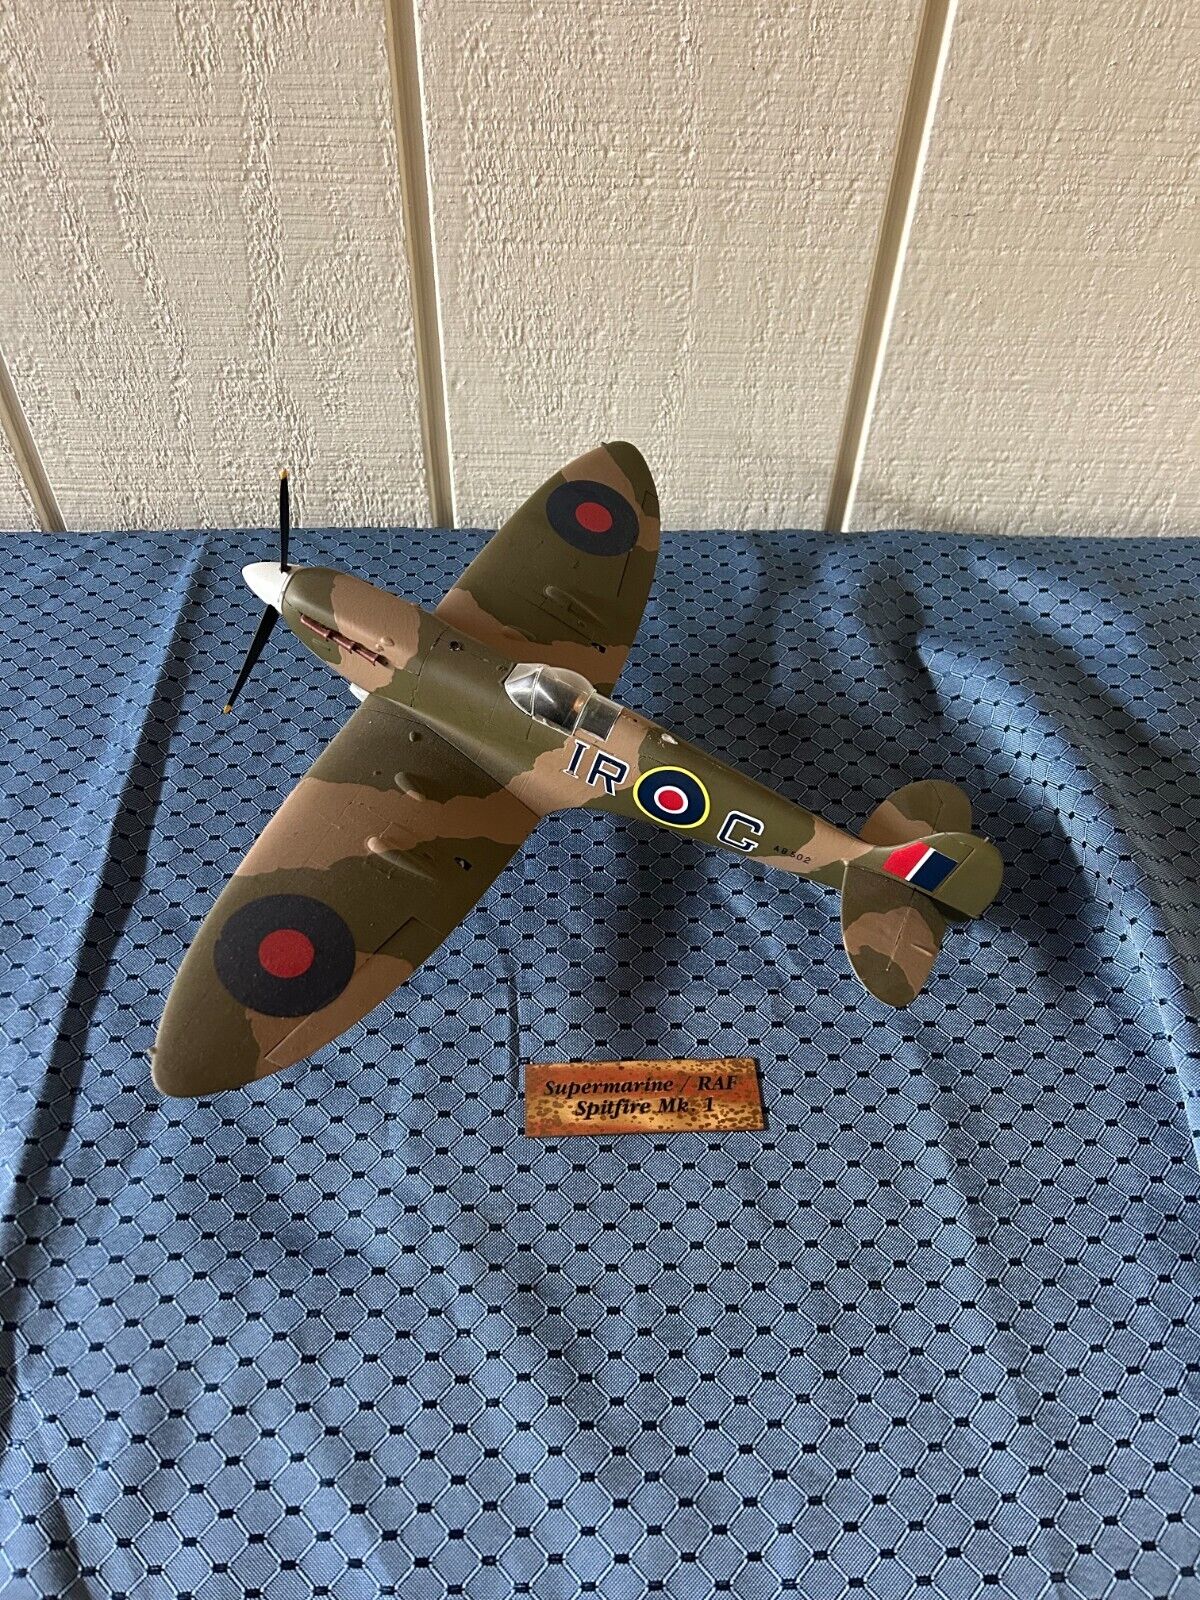 Supermarine/RAF Spitfire Mk 1 Plastic Model